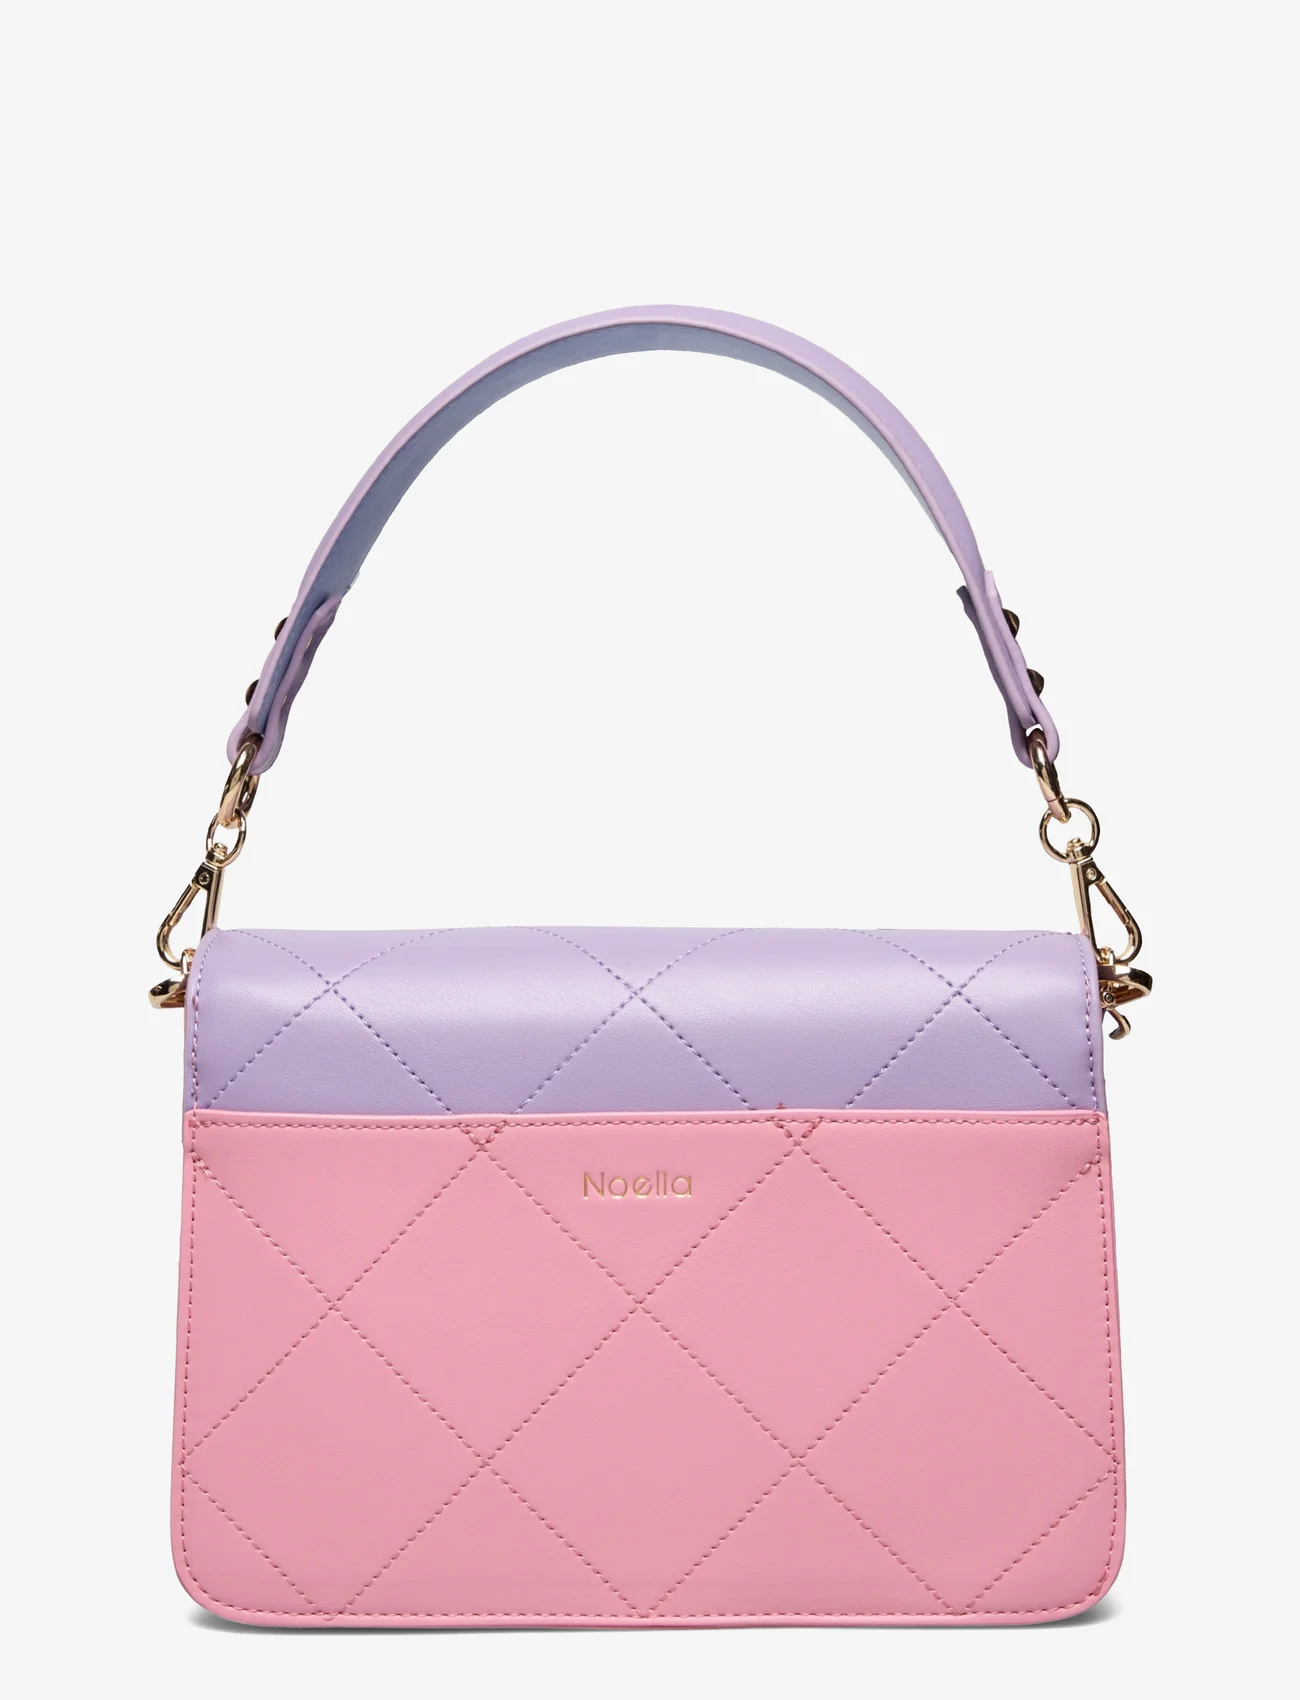 Noella - Blanca Multi Compartment Bag - feestelijke kleding voor outlet-prijzen - light pink/light blue/purple - 1